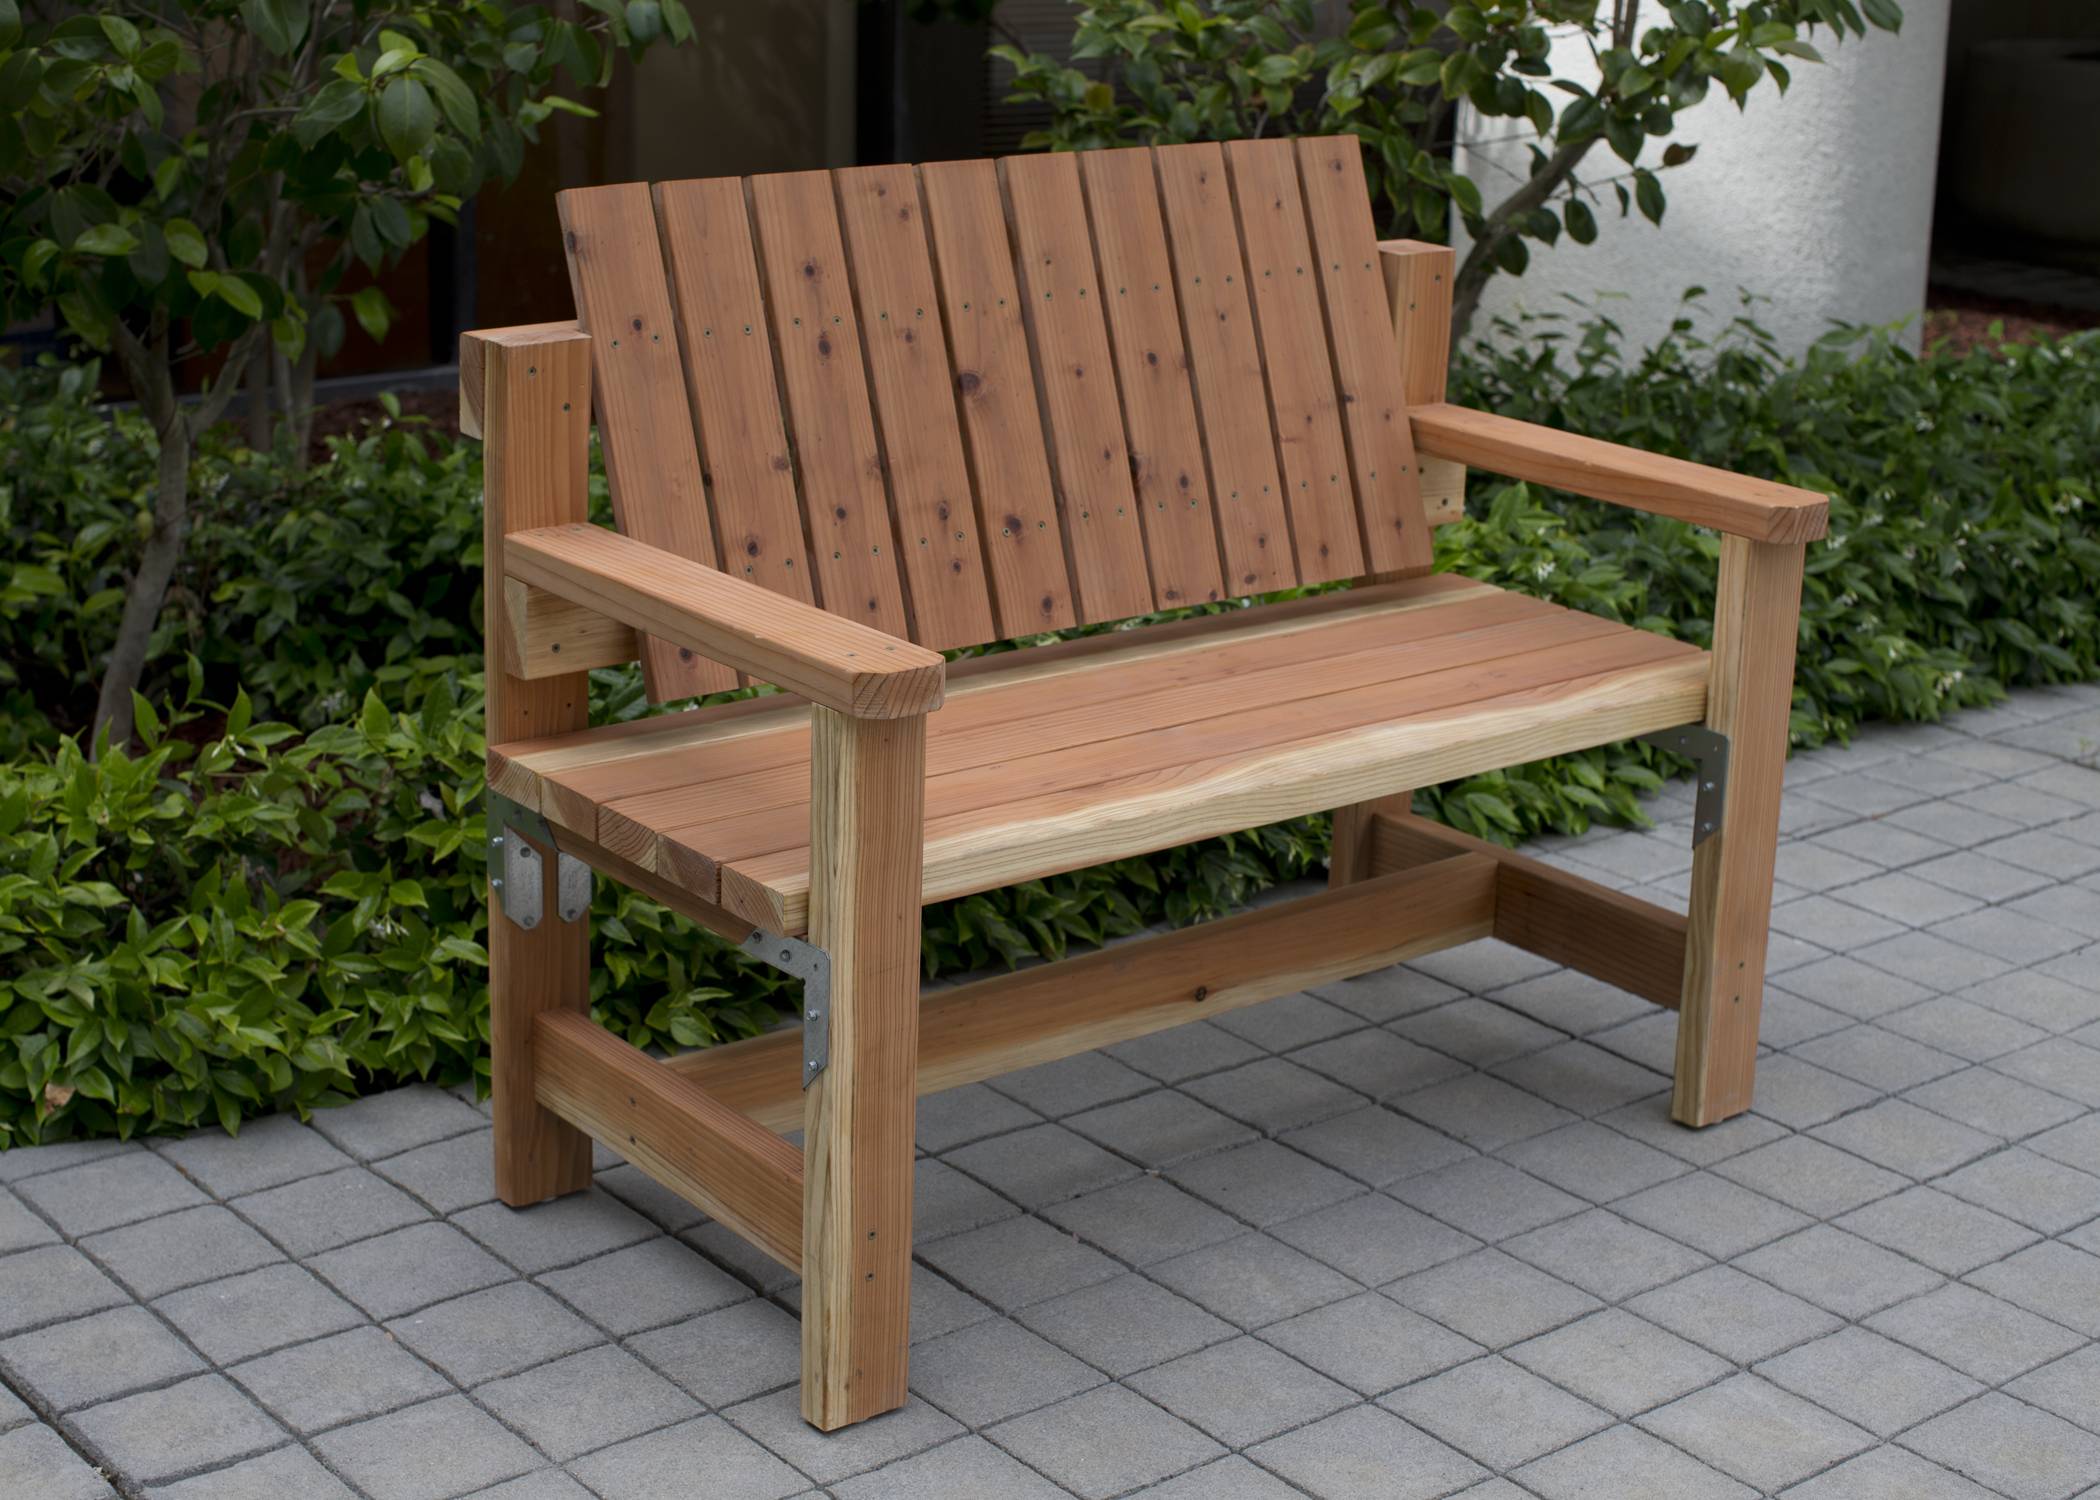 Build Garden Bench Outdoor Furniture Plans